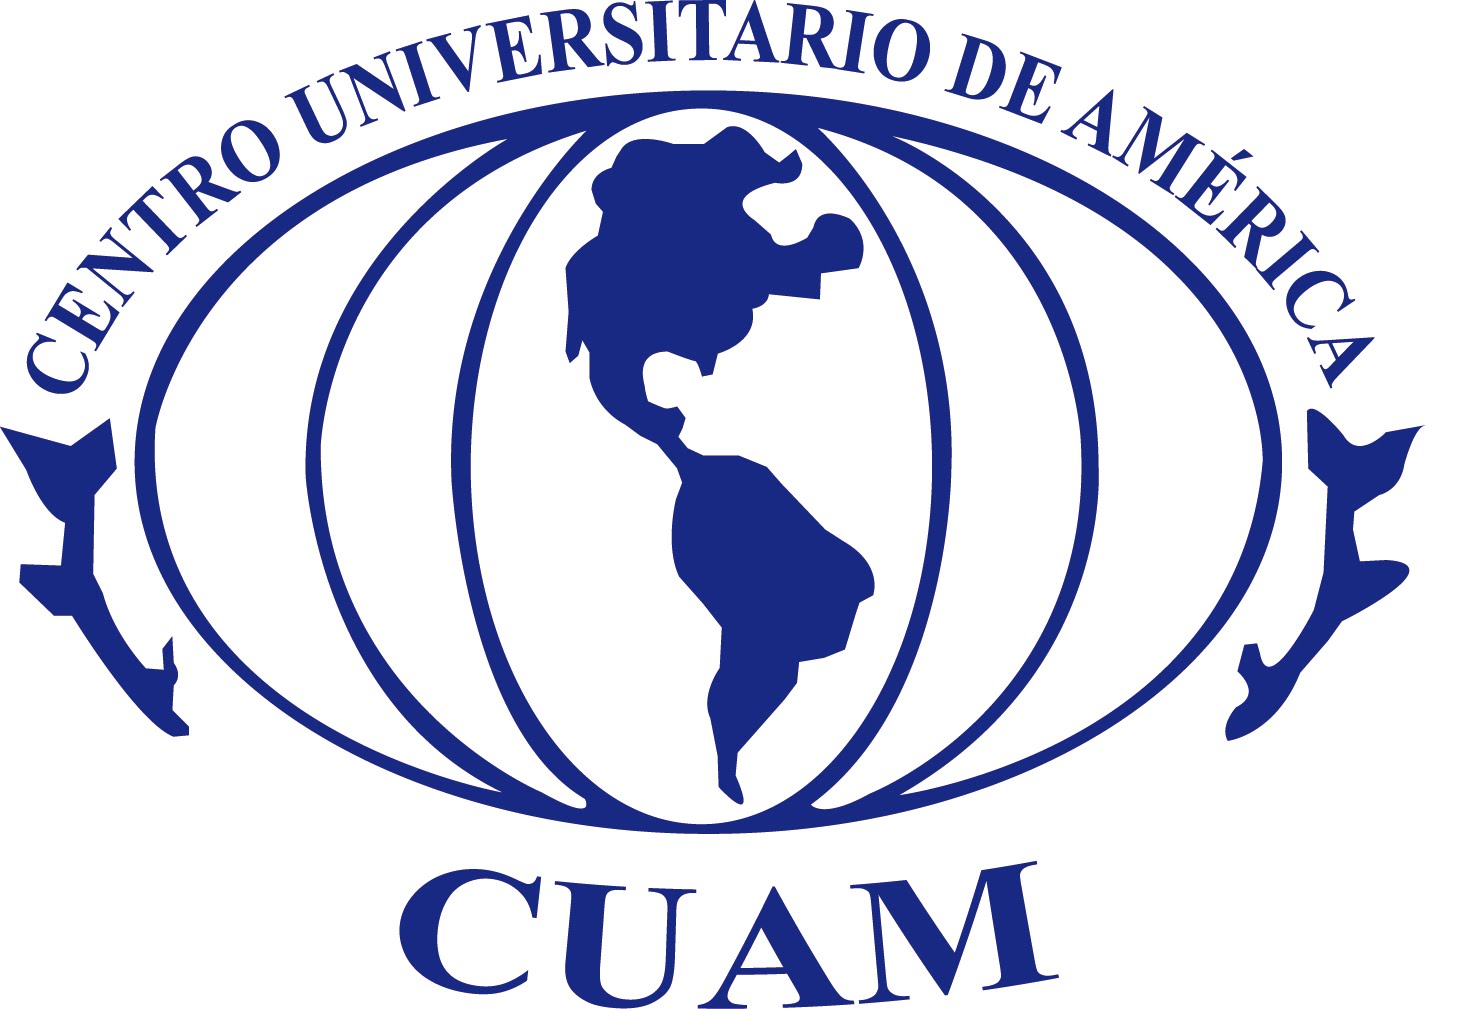 UNA centro universitario Logo photo - 1